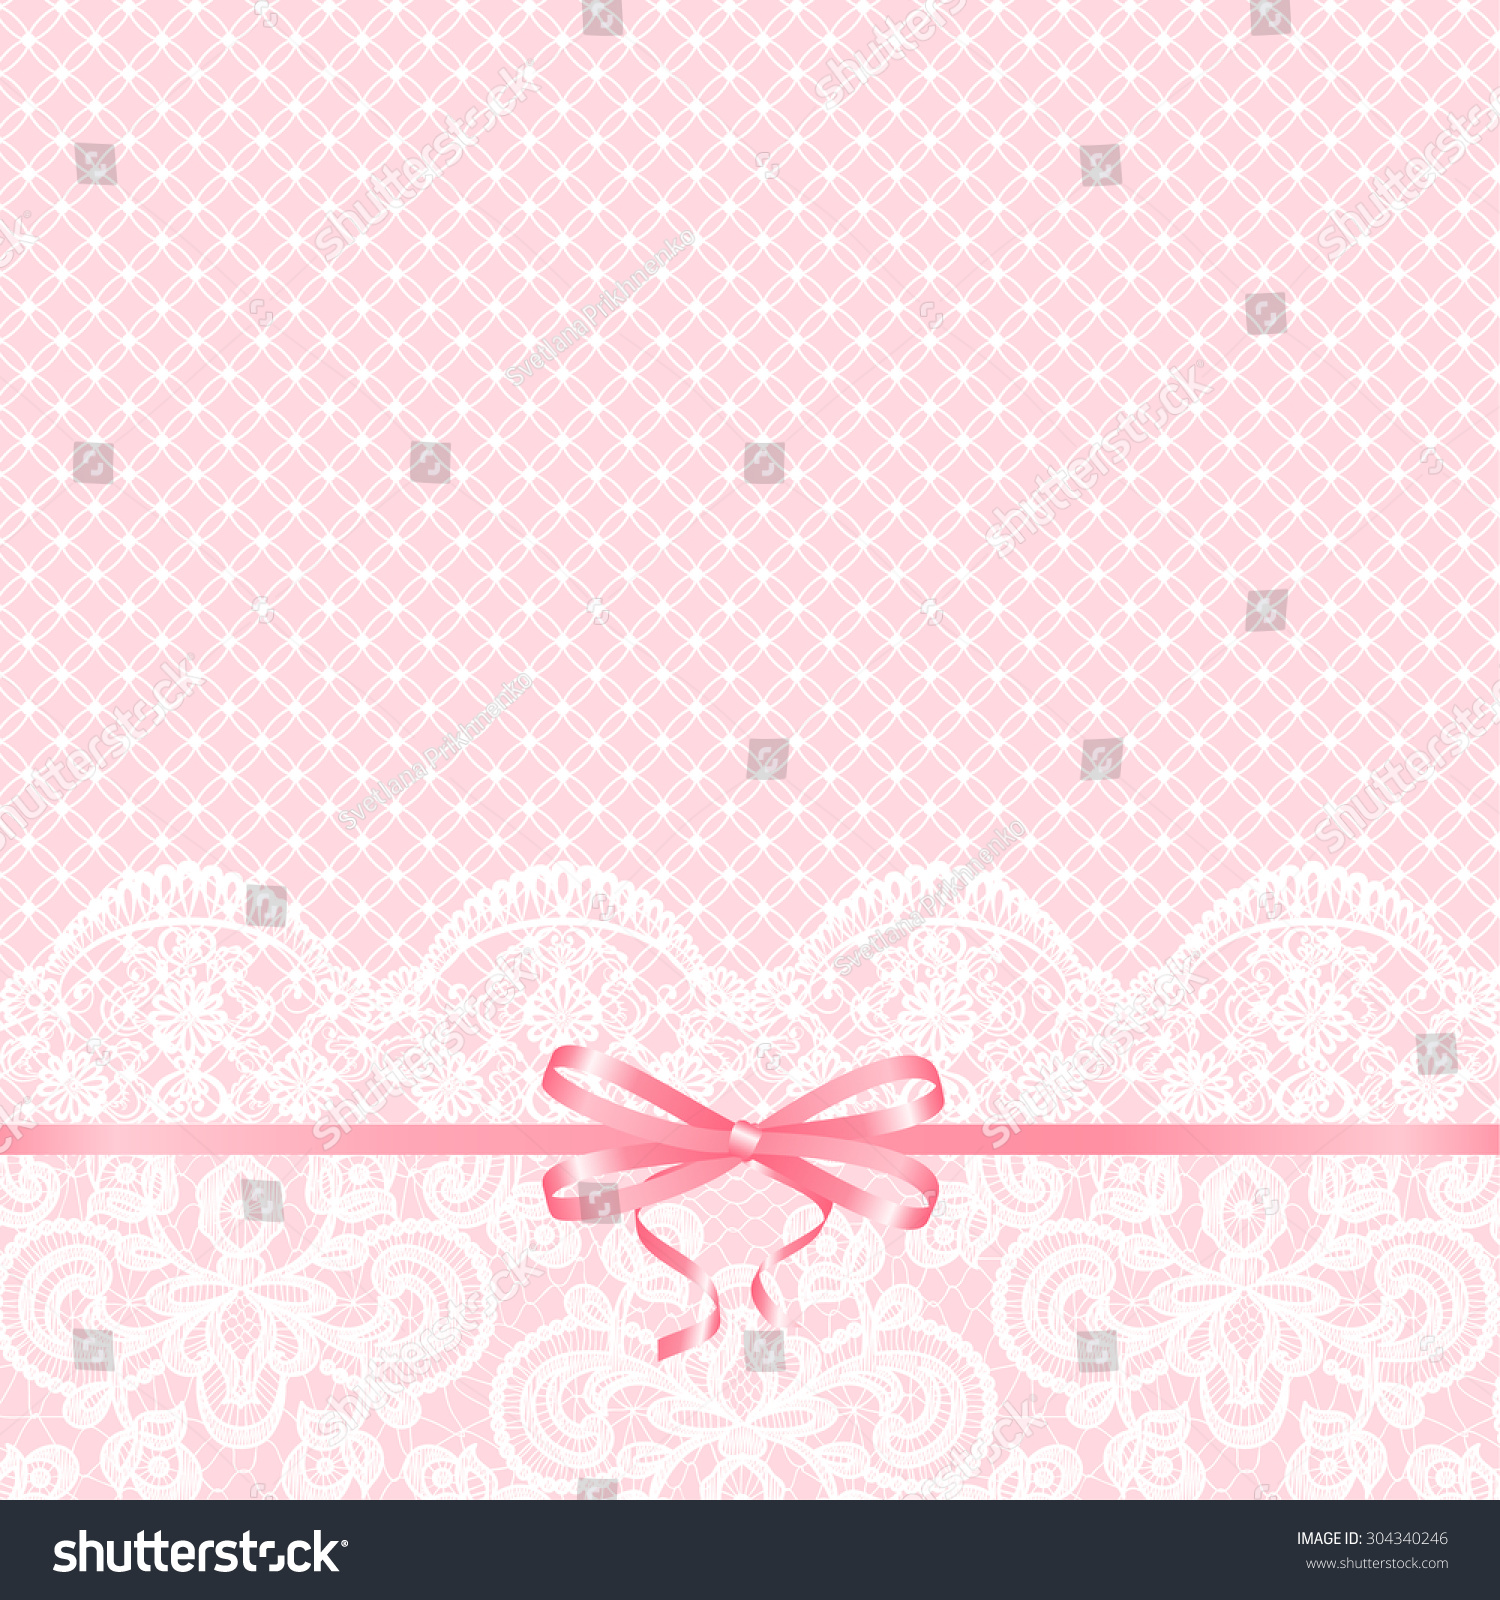 Pink Wedding Invitation Background Stock Illustration ...